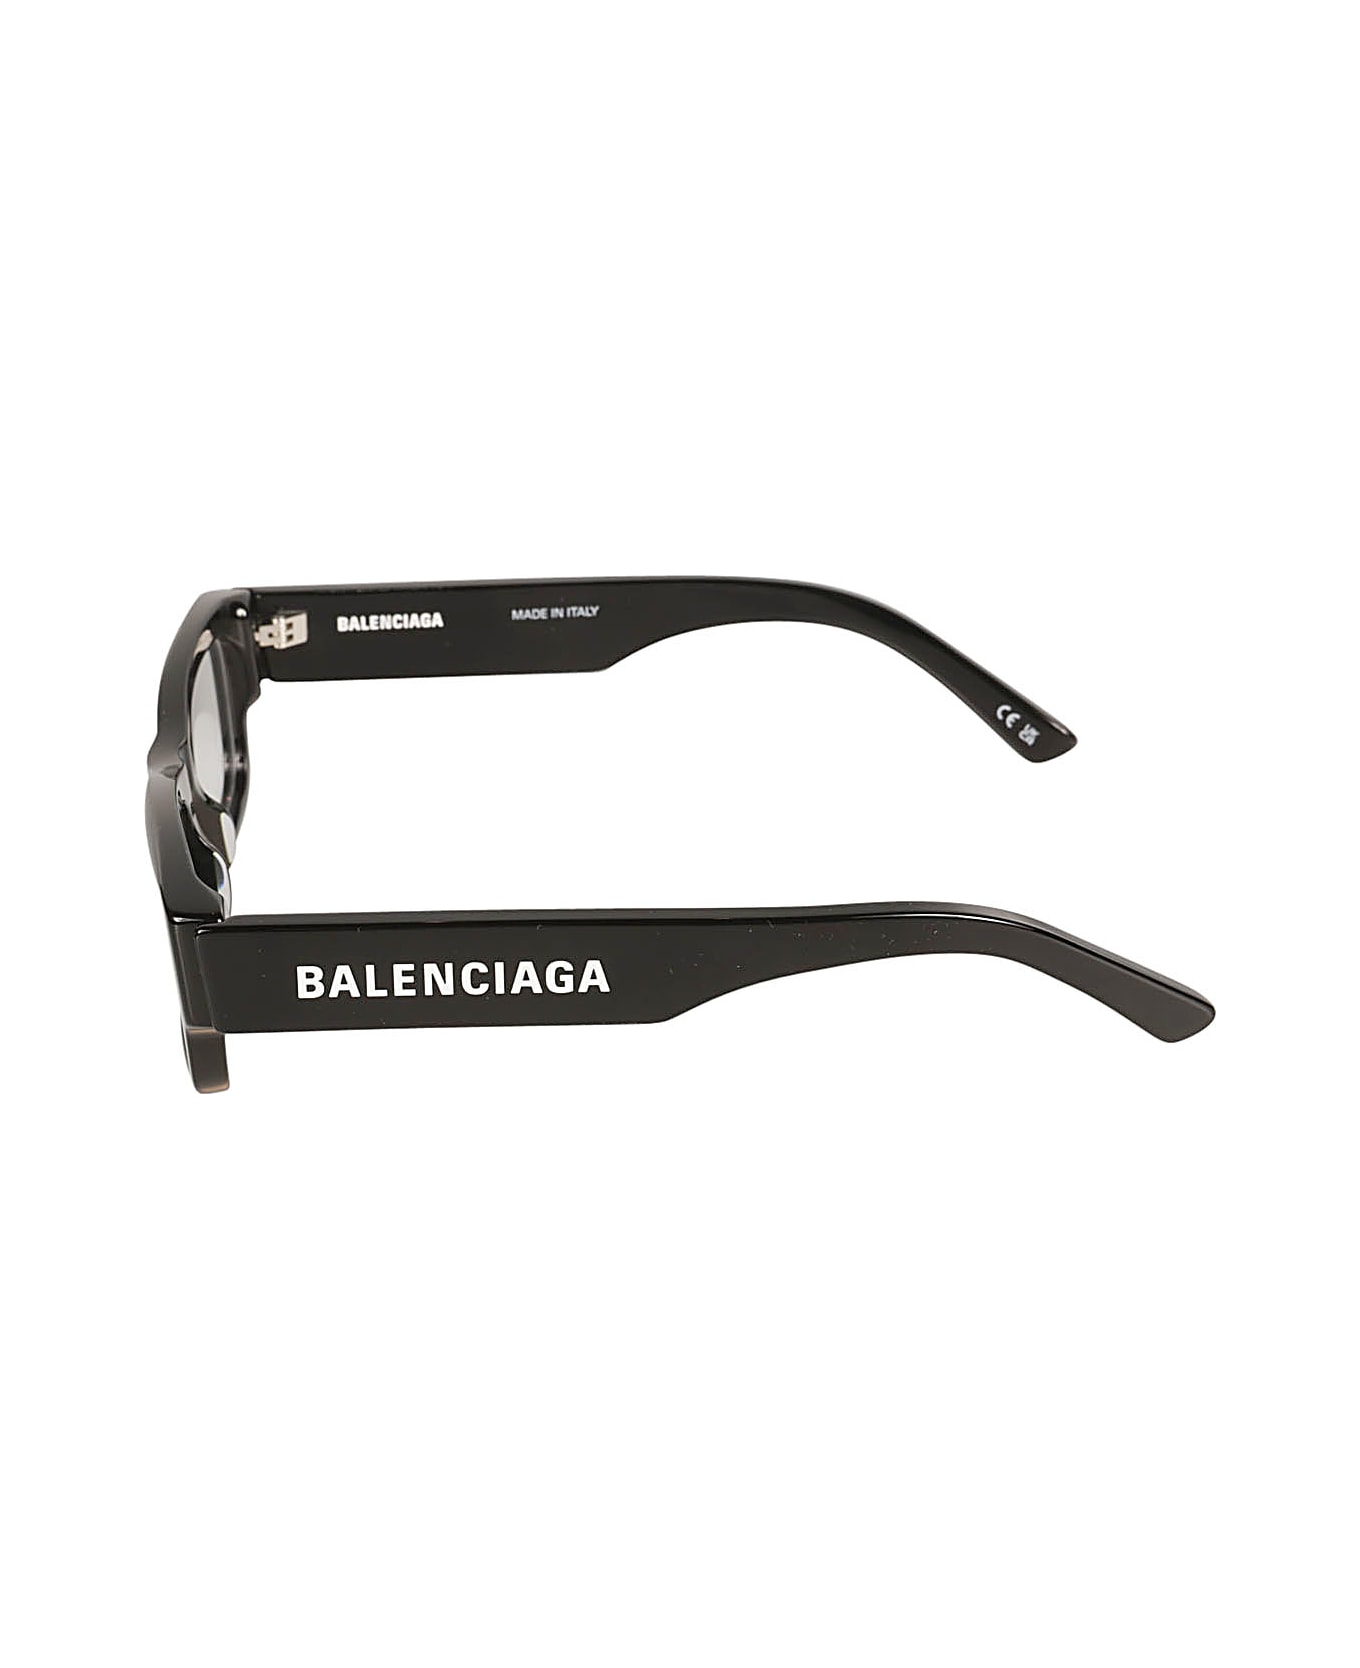 Balenciaga Eyewear Logo Sided Rectangular Frame Glasses - Black/Transparent